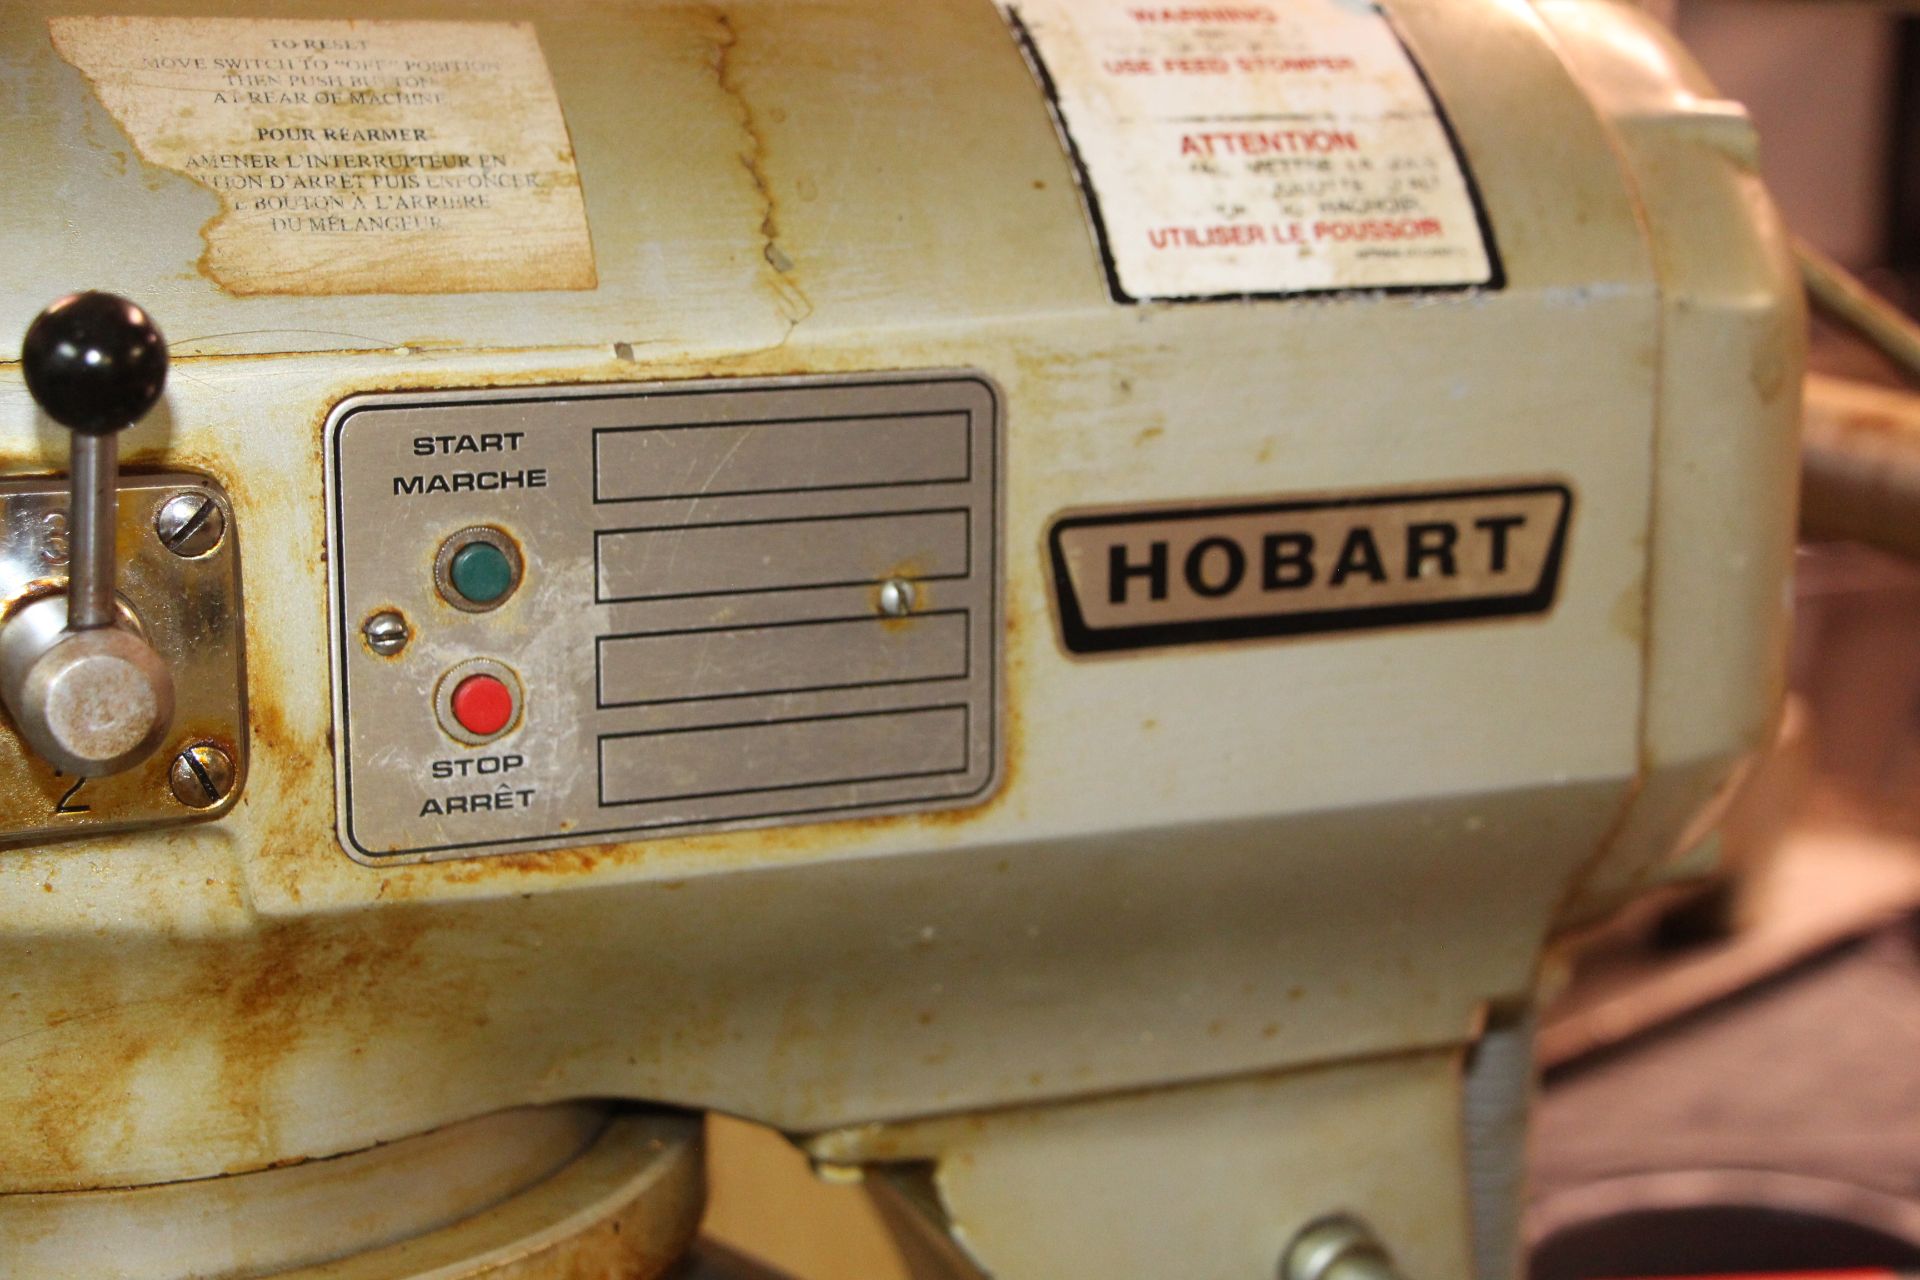 Hobart electric mixer - Image 2 of 2